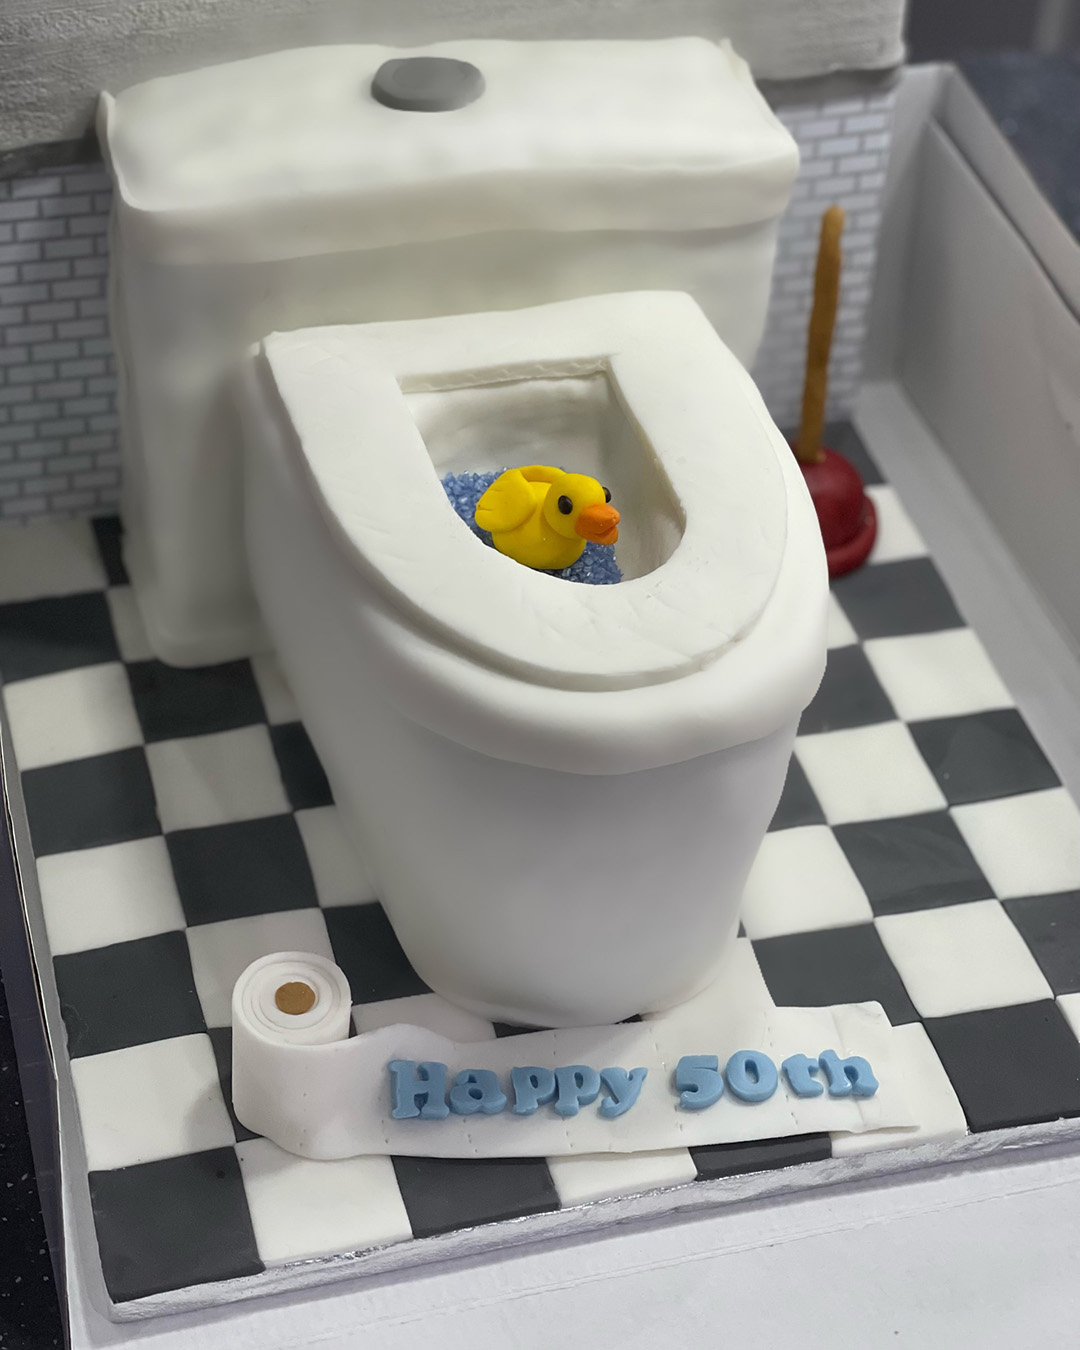 Instagram baker creates life-like toilet paper cake - Eat Out -  delicious.com.au